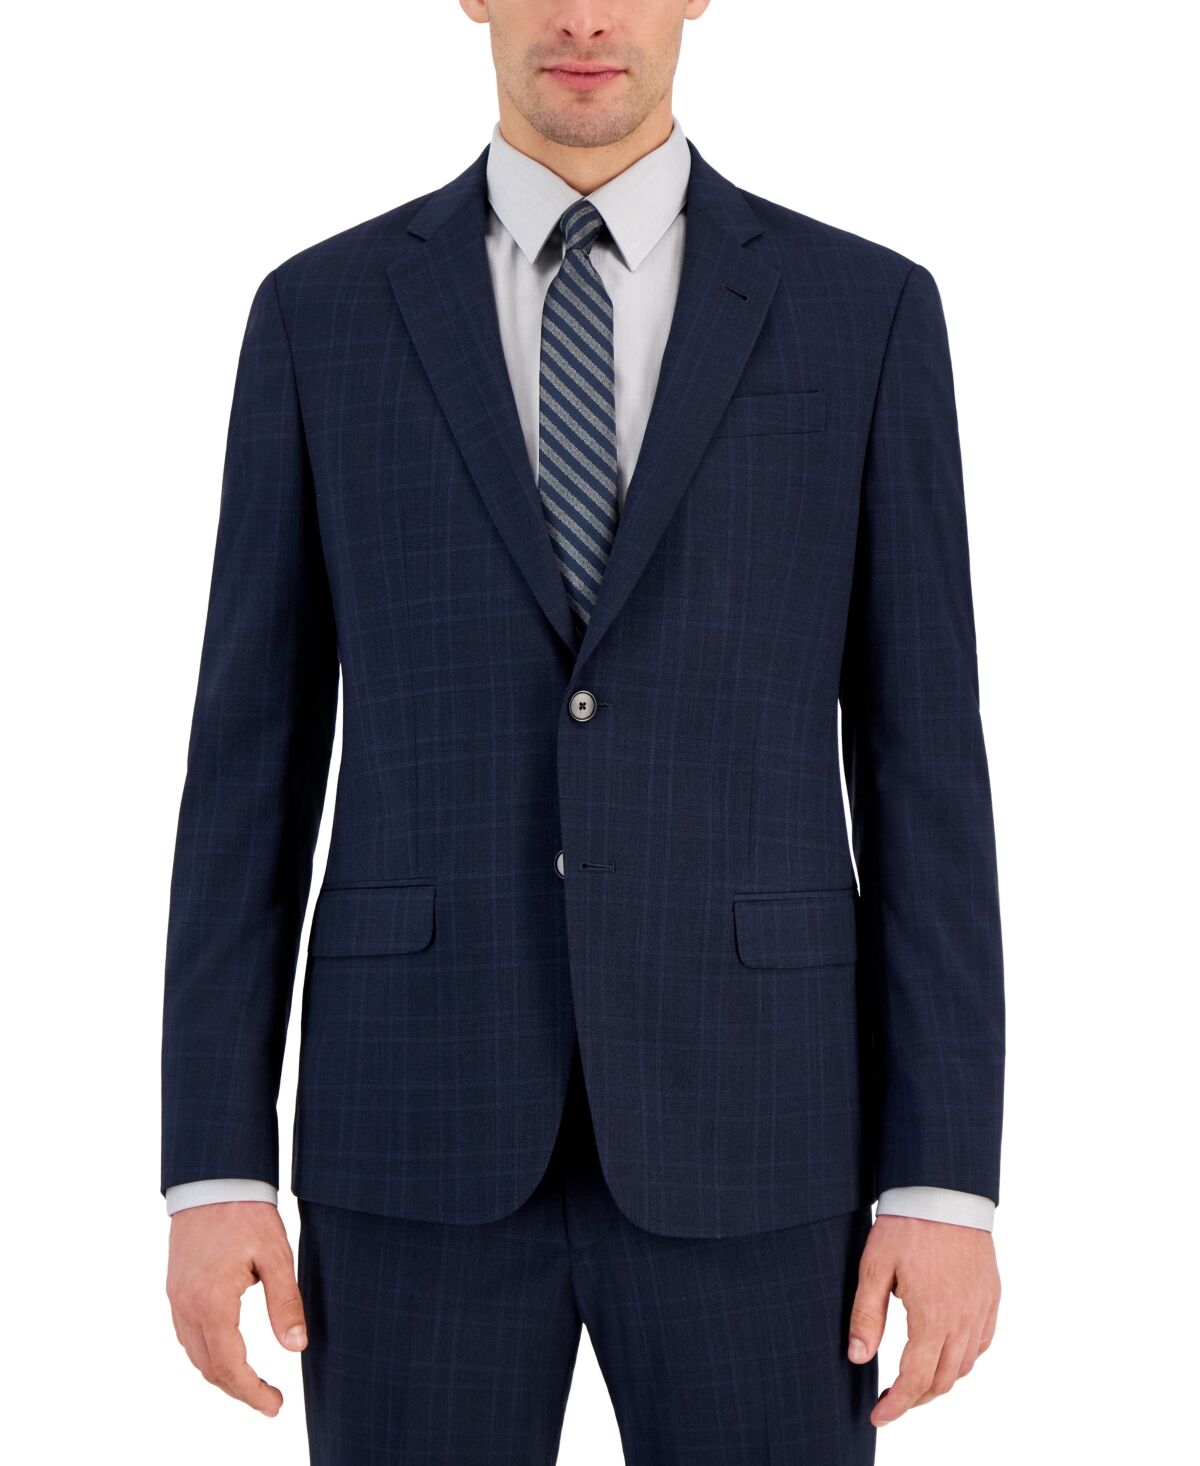 A|x Armani Exchange A X Armani Exchange Men's Slim-Fit Navy Windowpane Plaid Suit Jacket - Navy